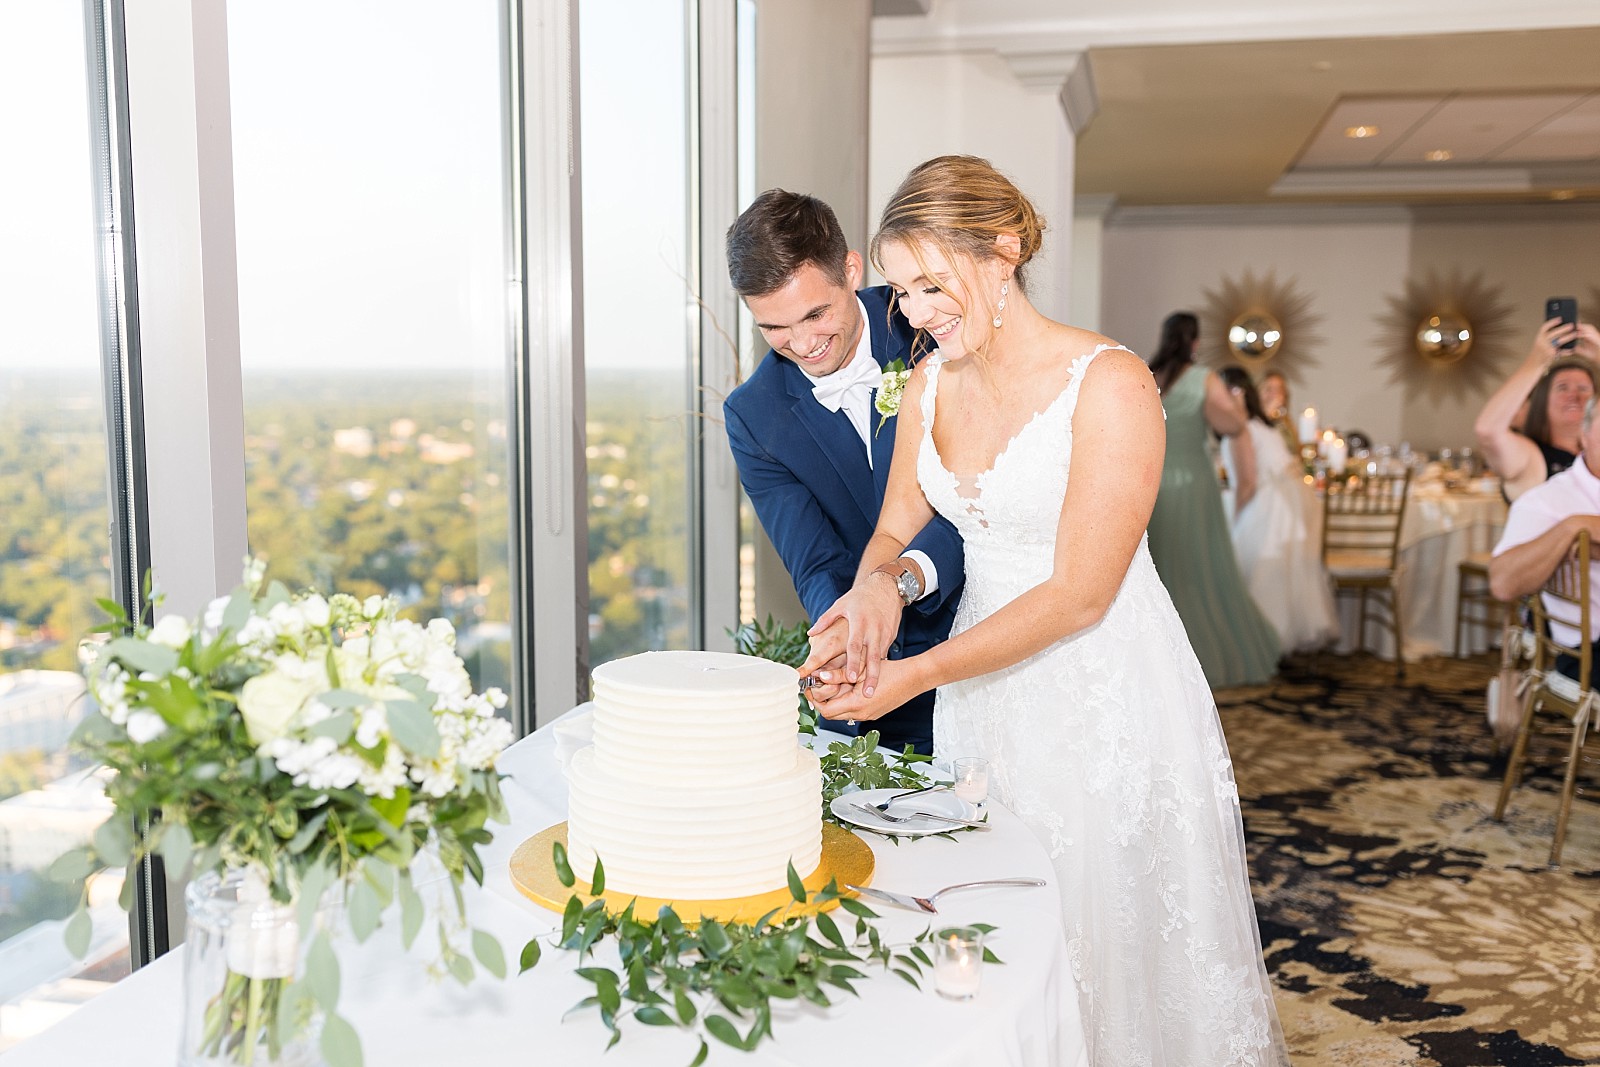 Bride and groom cutting cake | Raleigh Wedding Photographer Sarah Hinckley